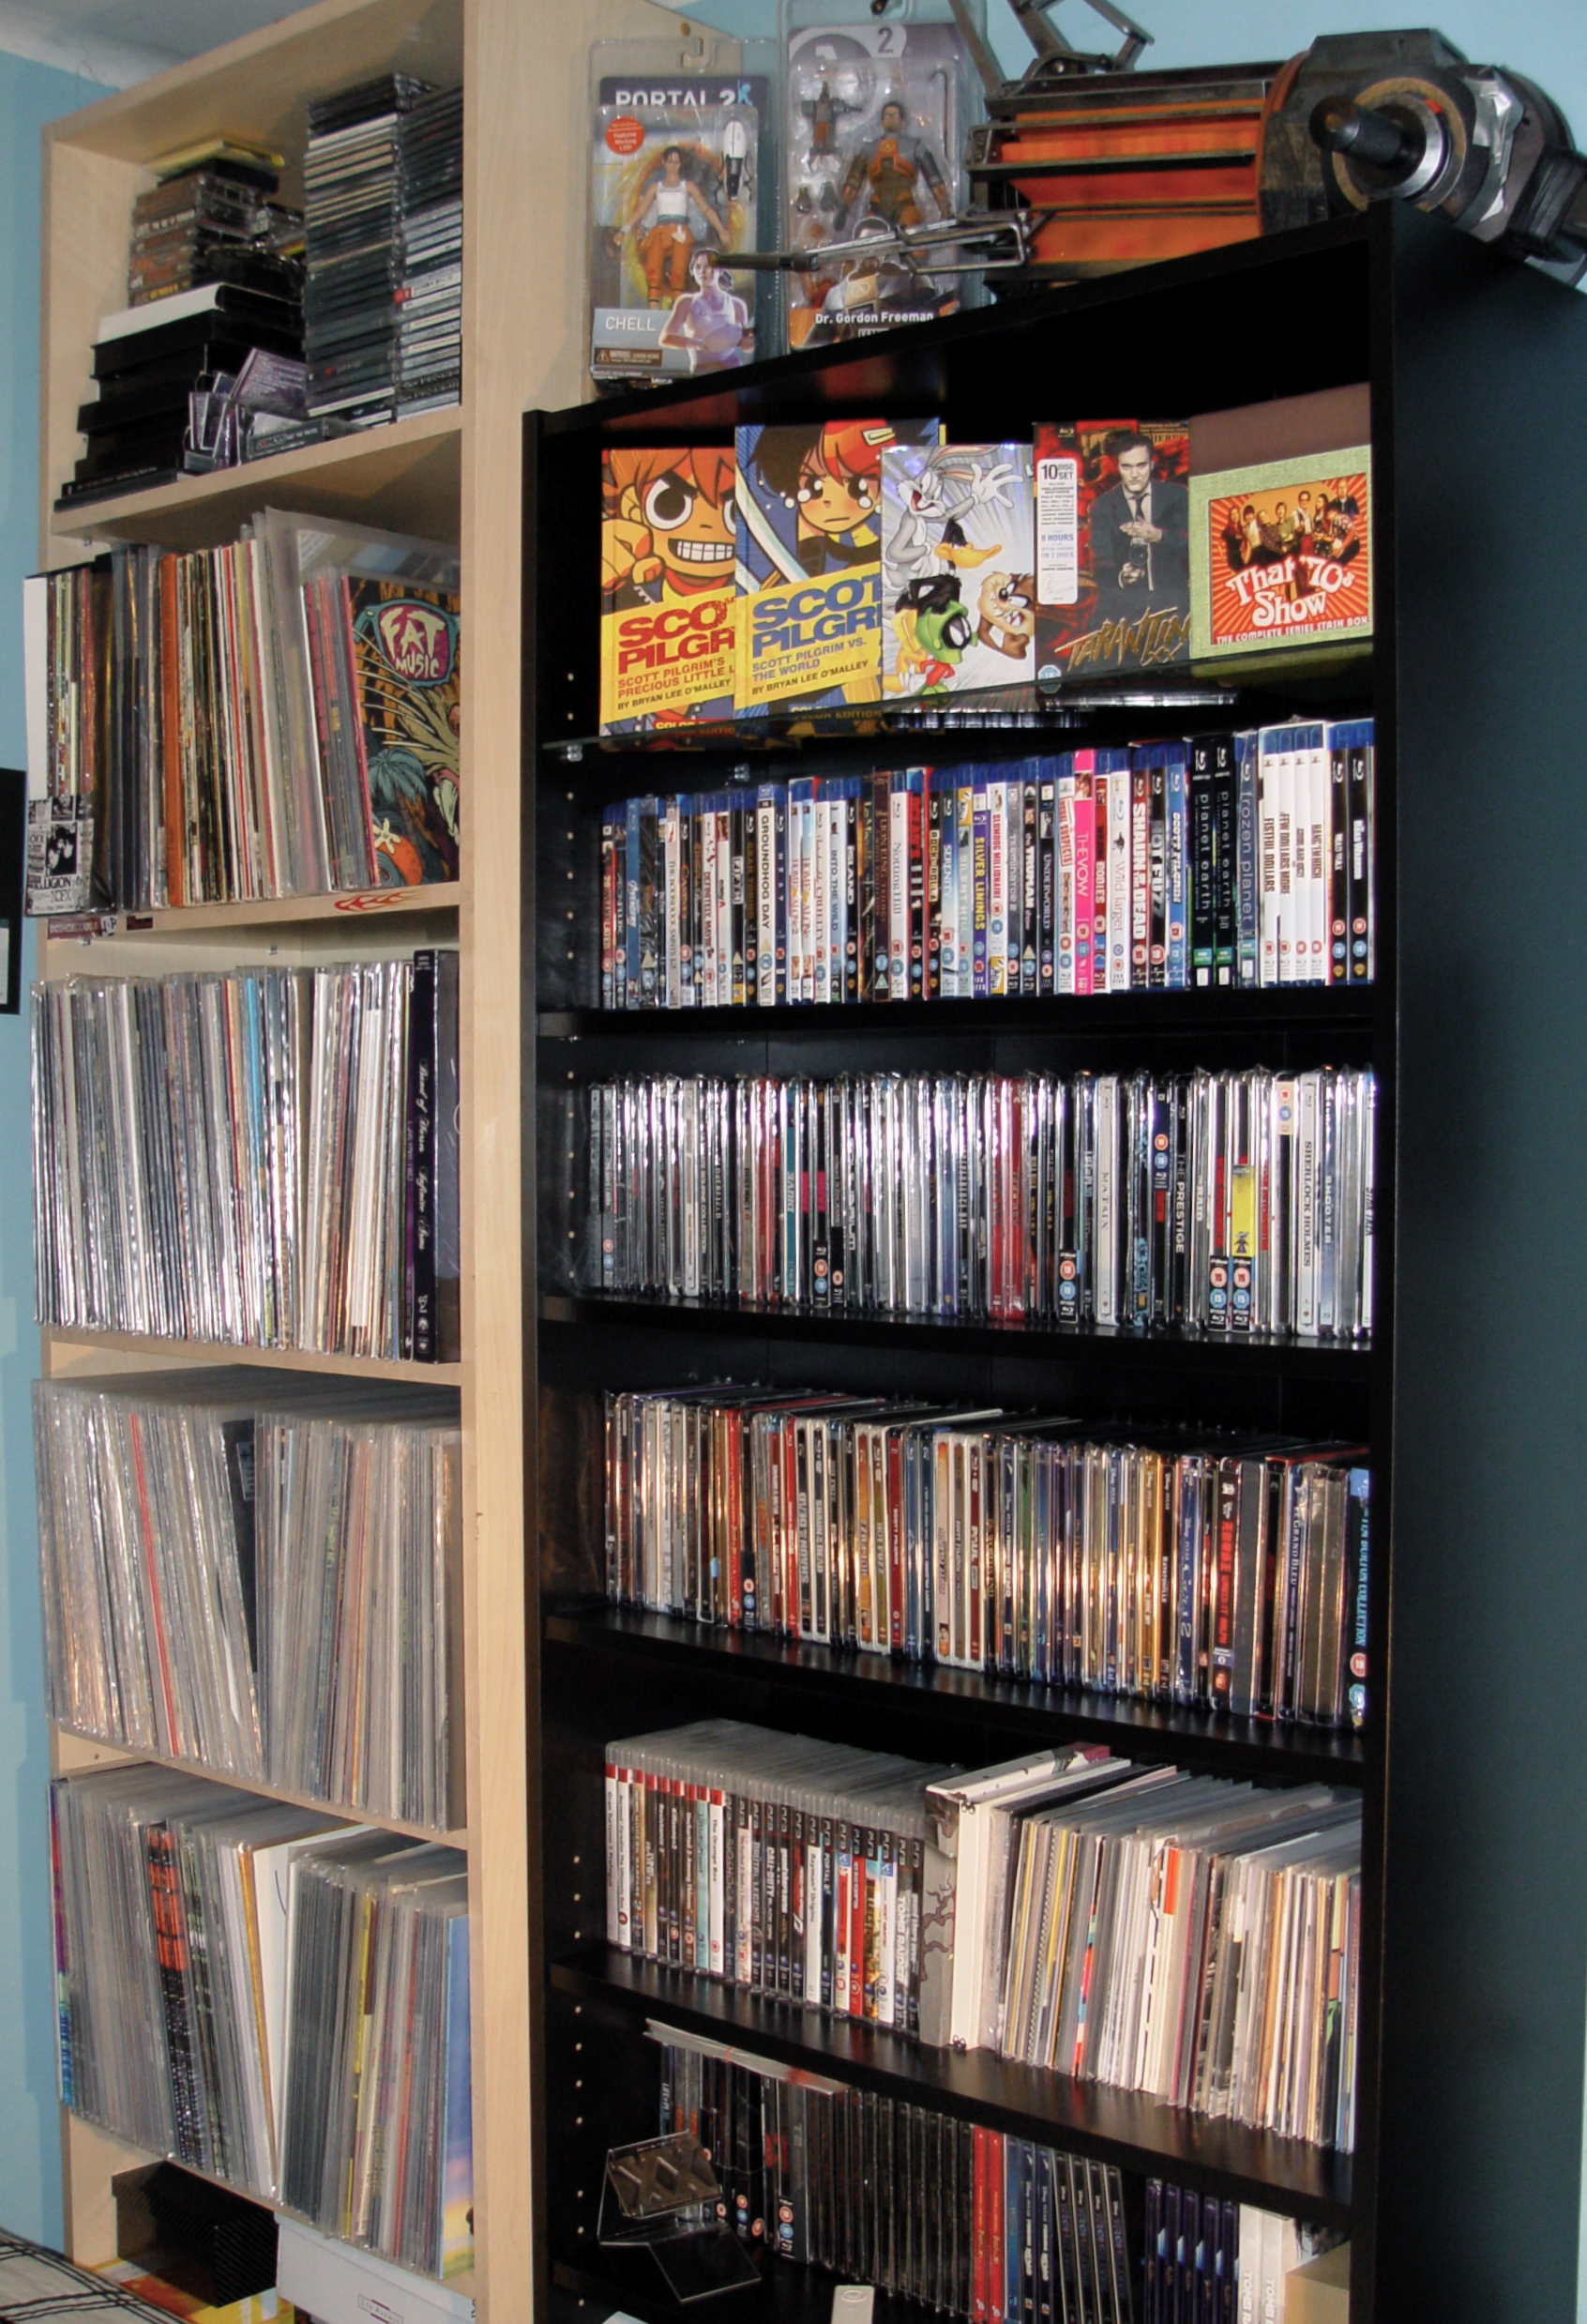 Records & Movies